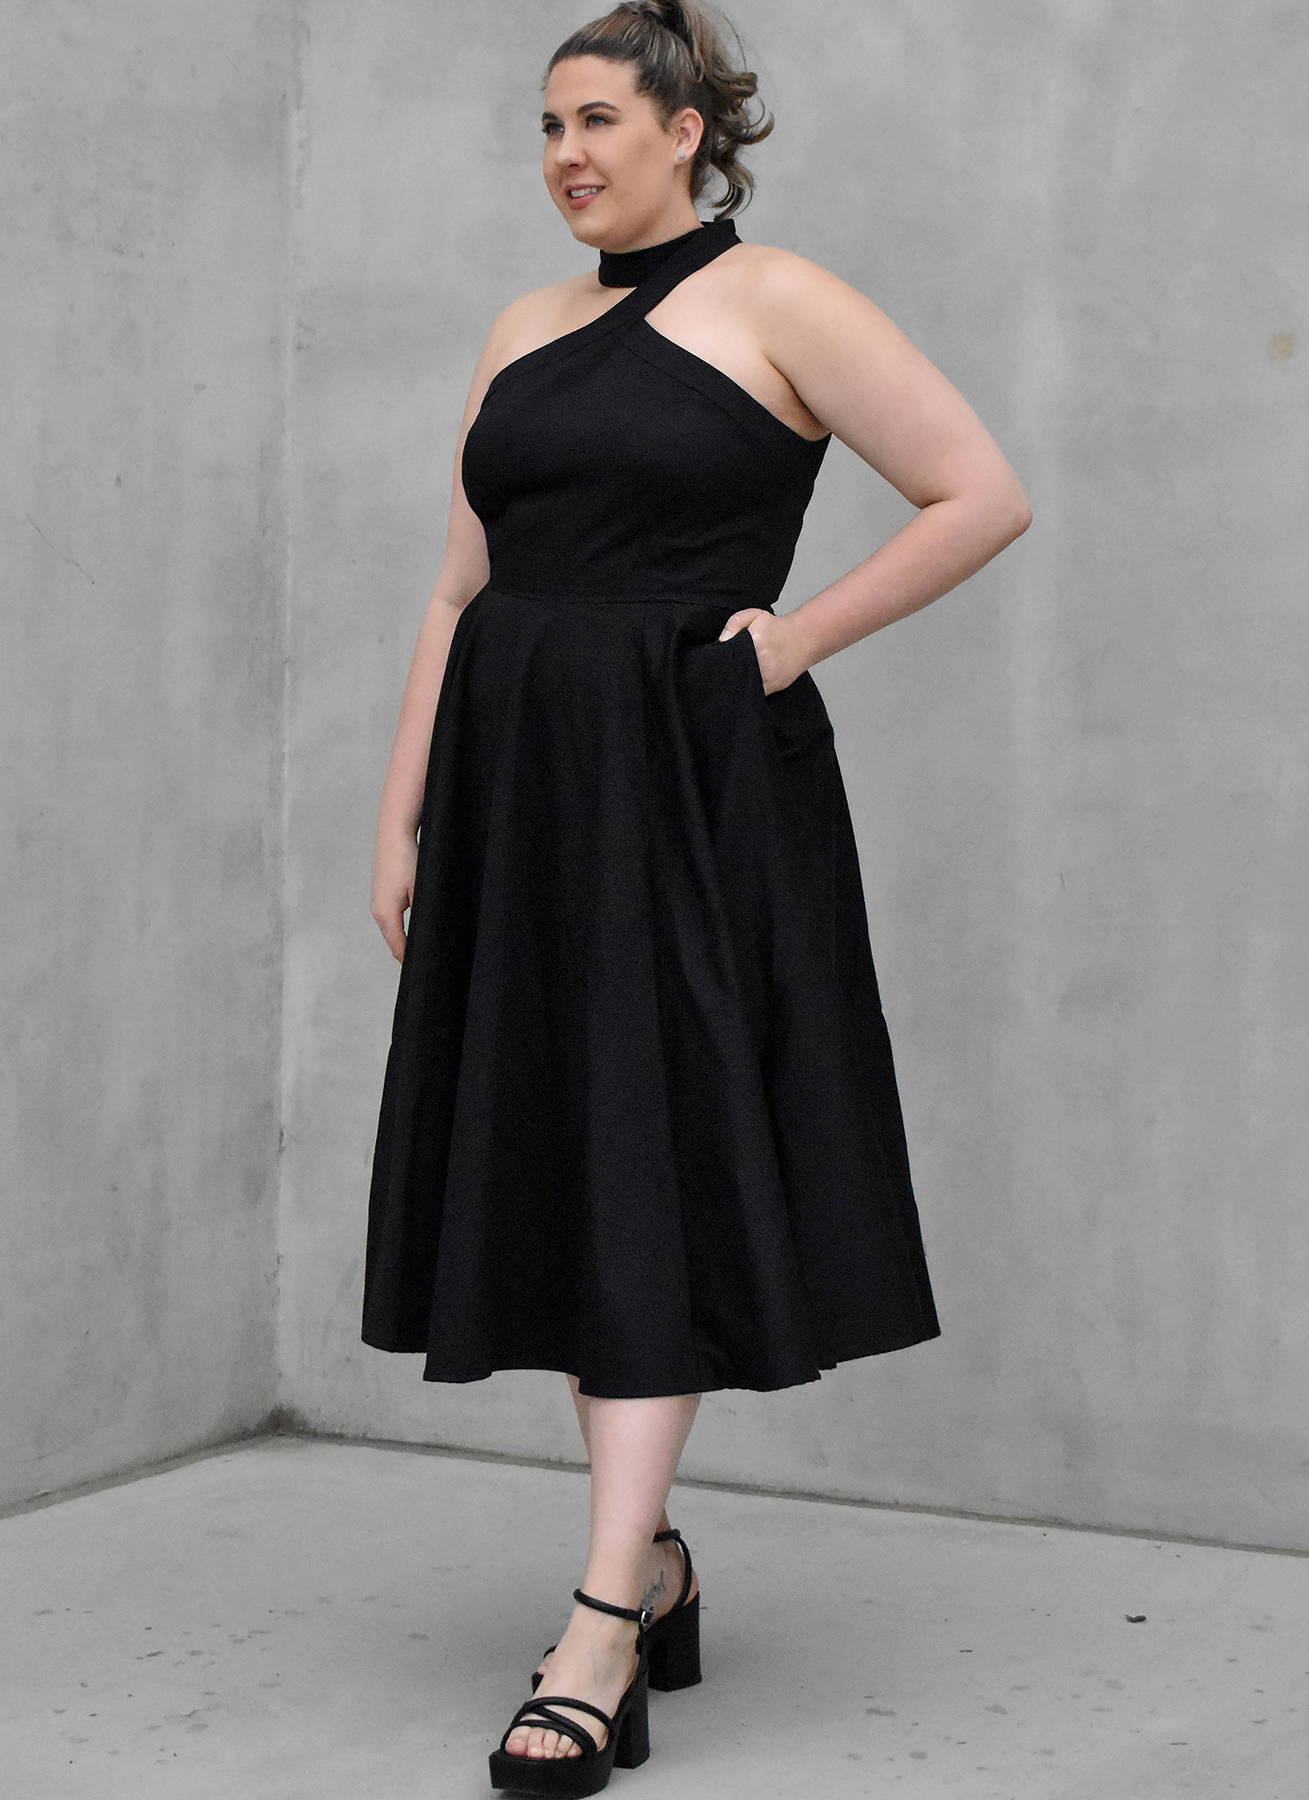 Female model in black dress